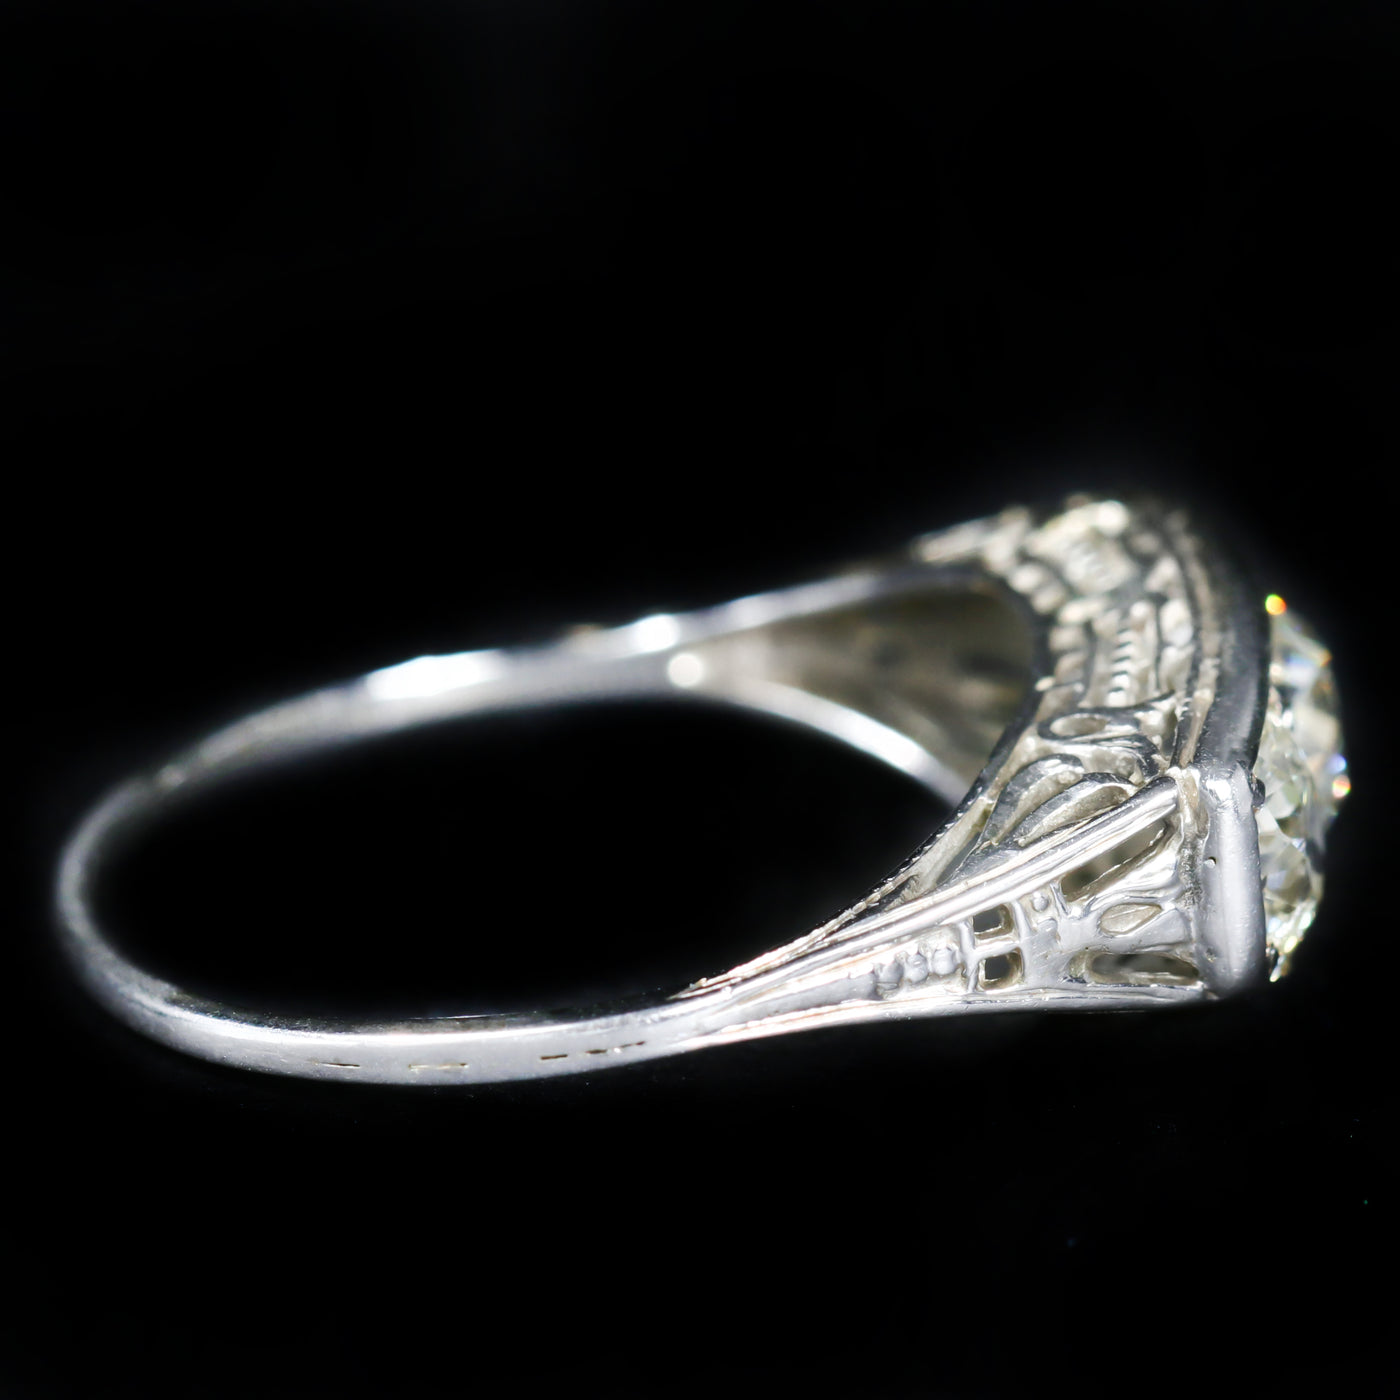 Art Deco 1.80 CTW Old Mine Cut Diamond Engagement Ring